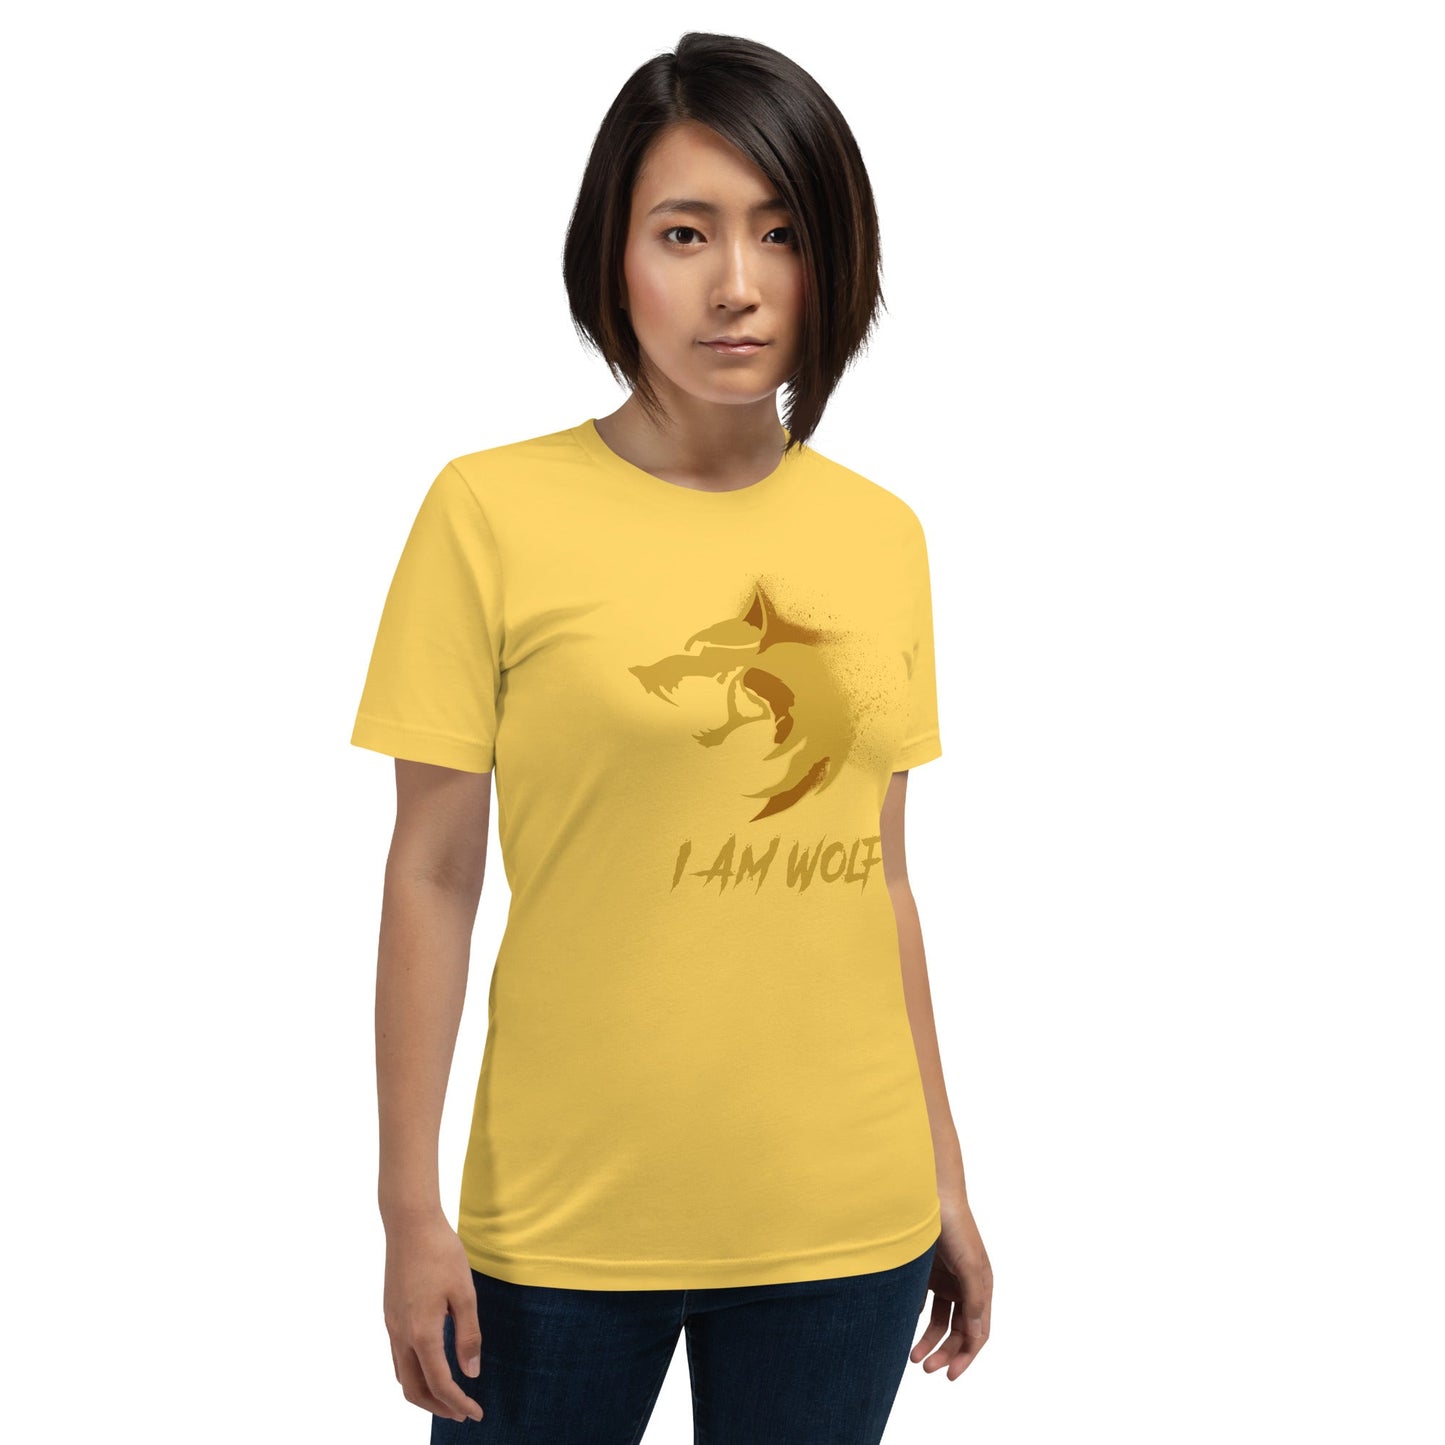 I AM WOLF Graphic T-Shirt